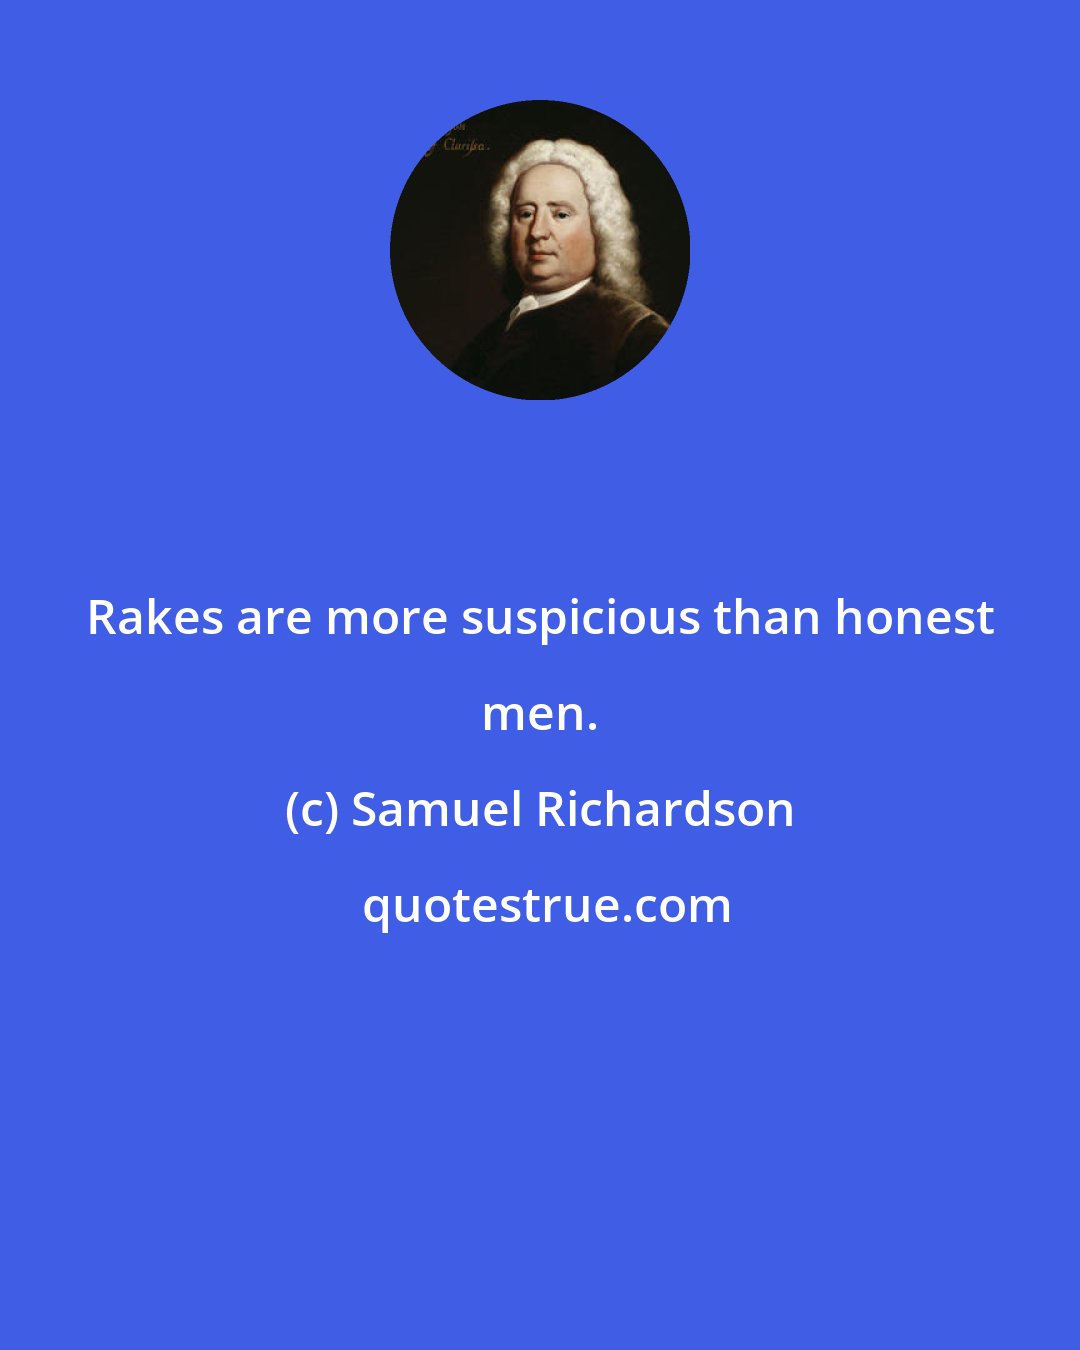 Samuel Richardson: Rakes are more suspicious than honest men.